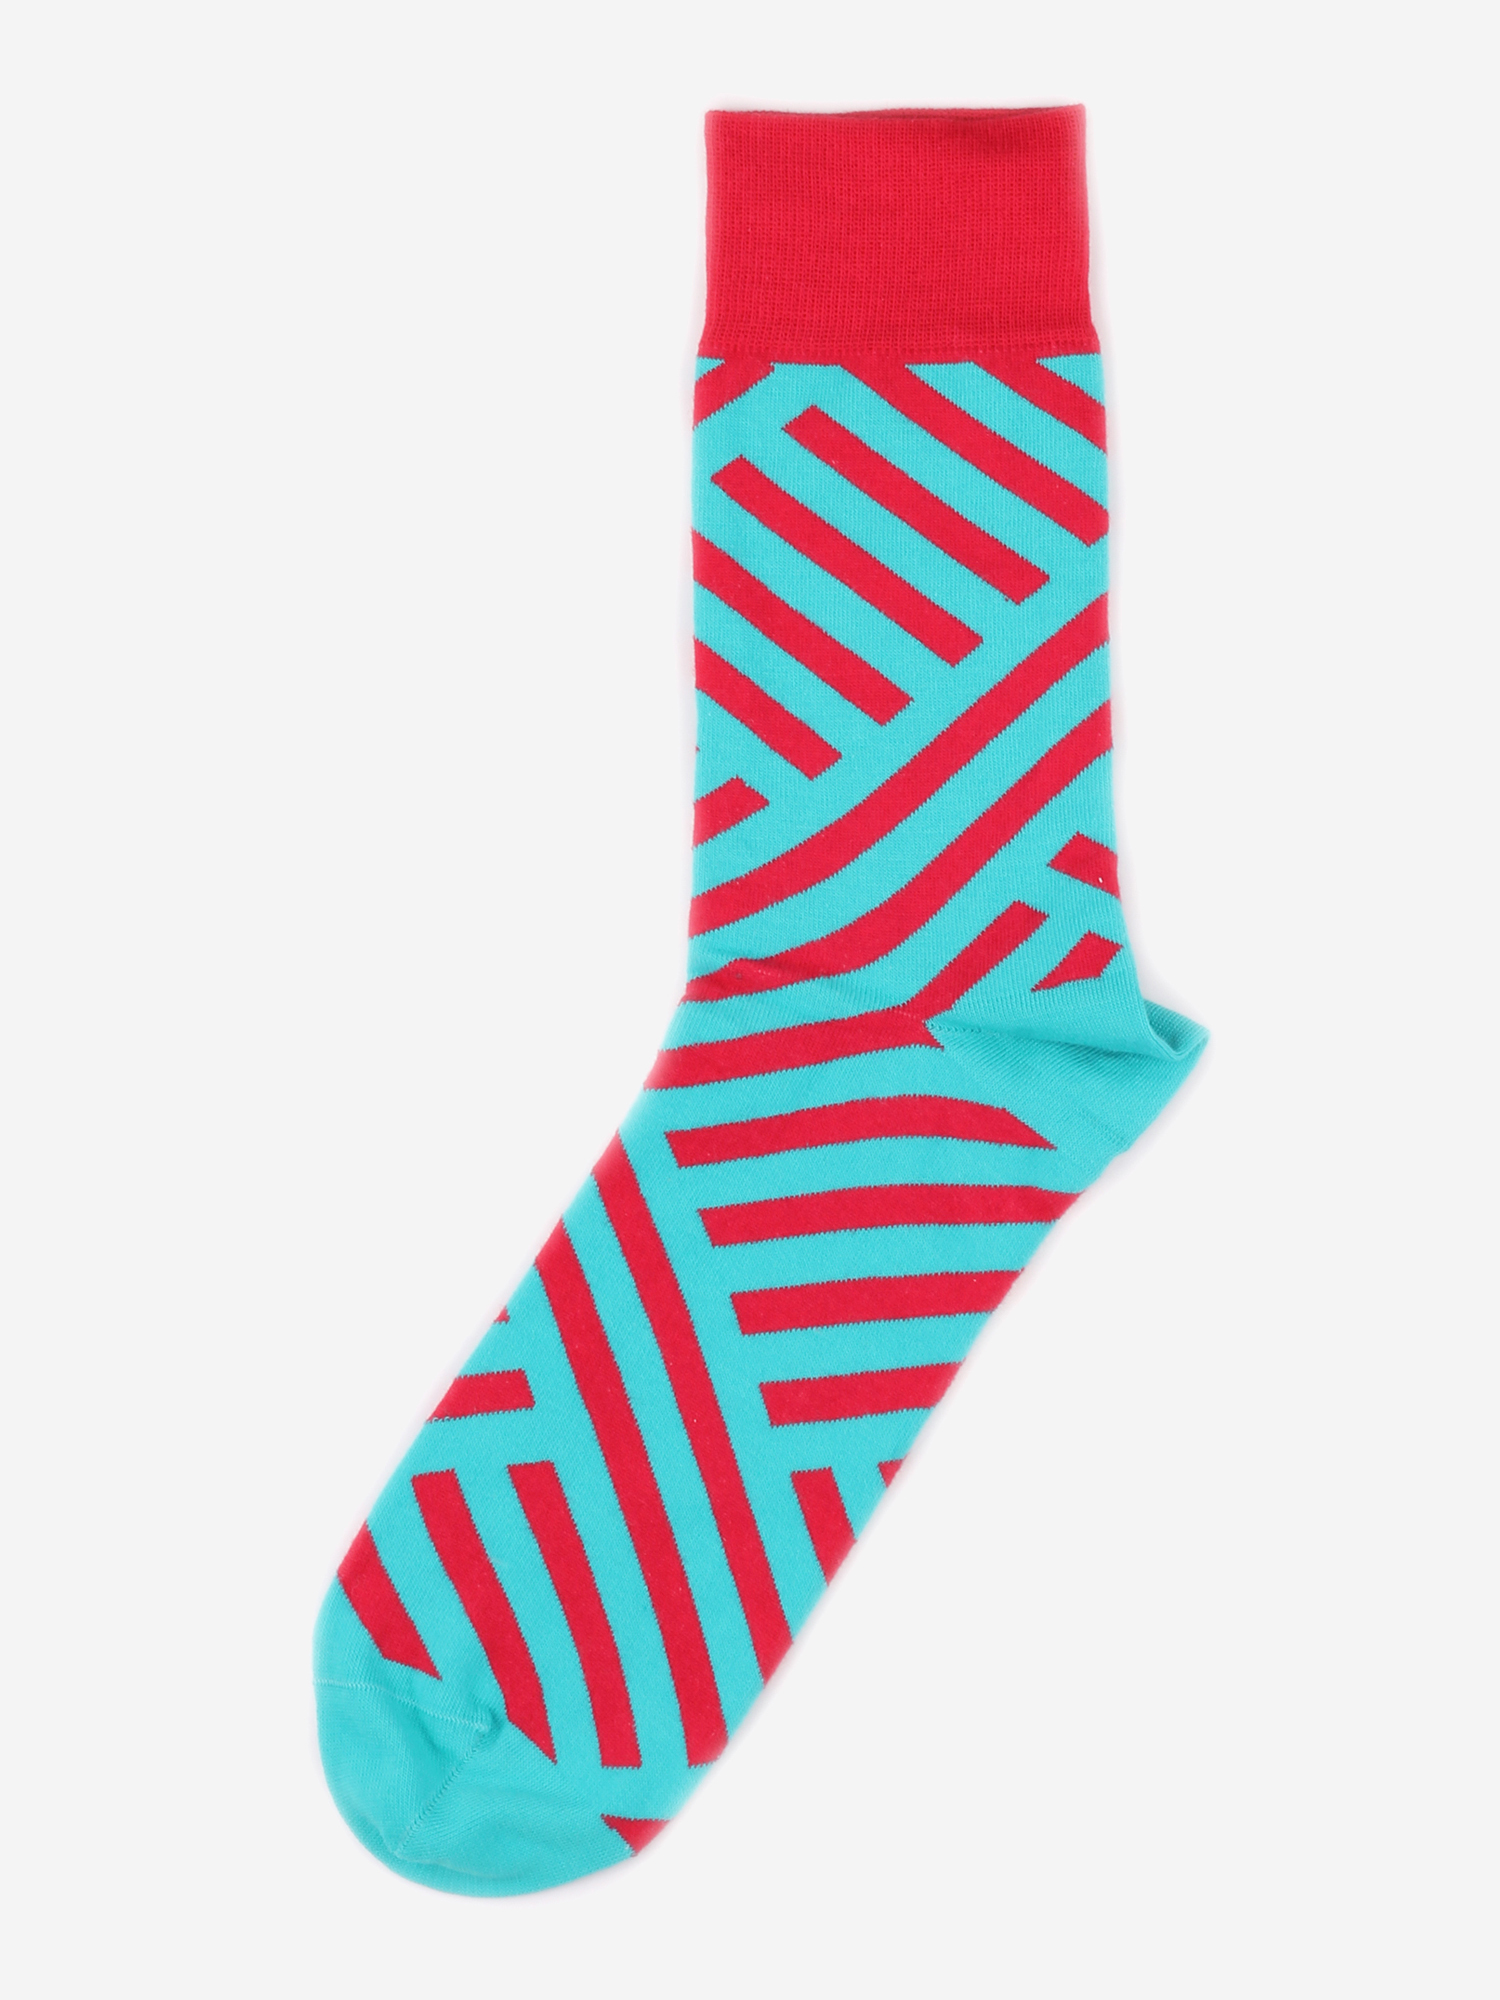 Дизайнерские носки Burning Heels - Diagonal Stripes - Red/Blue, Синий дизайнерские носки burning heels diagonal stripes yellow blue желтый